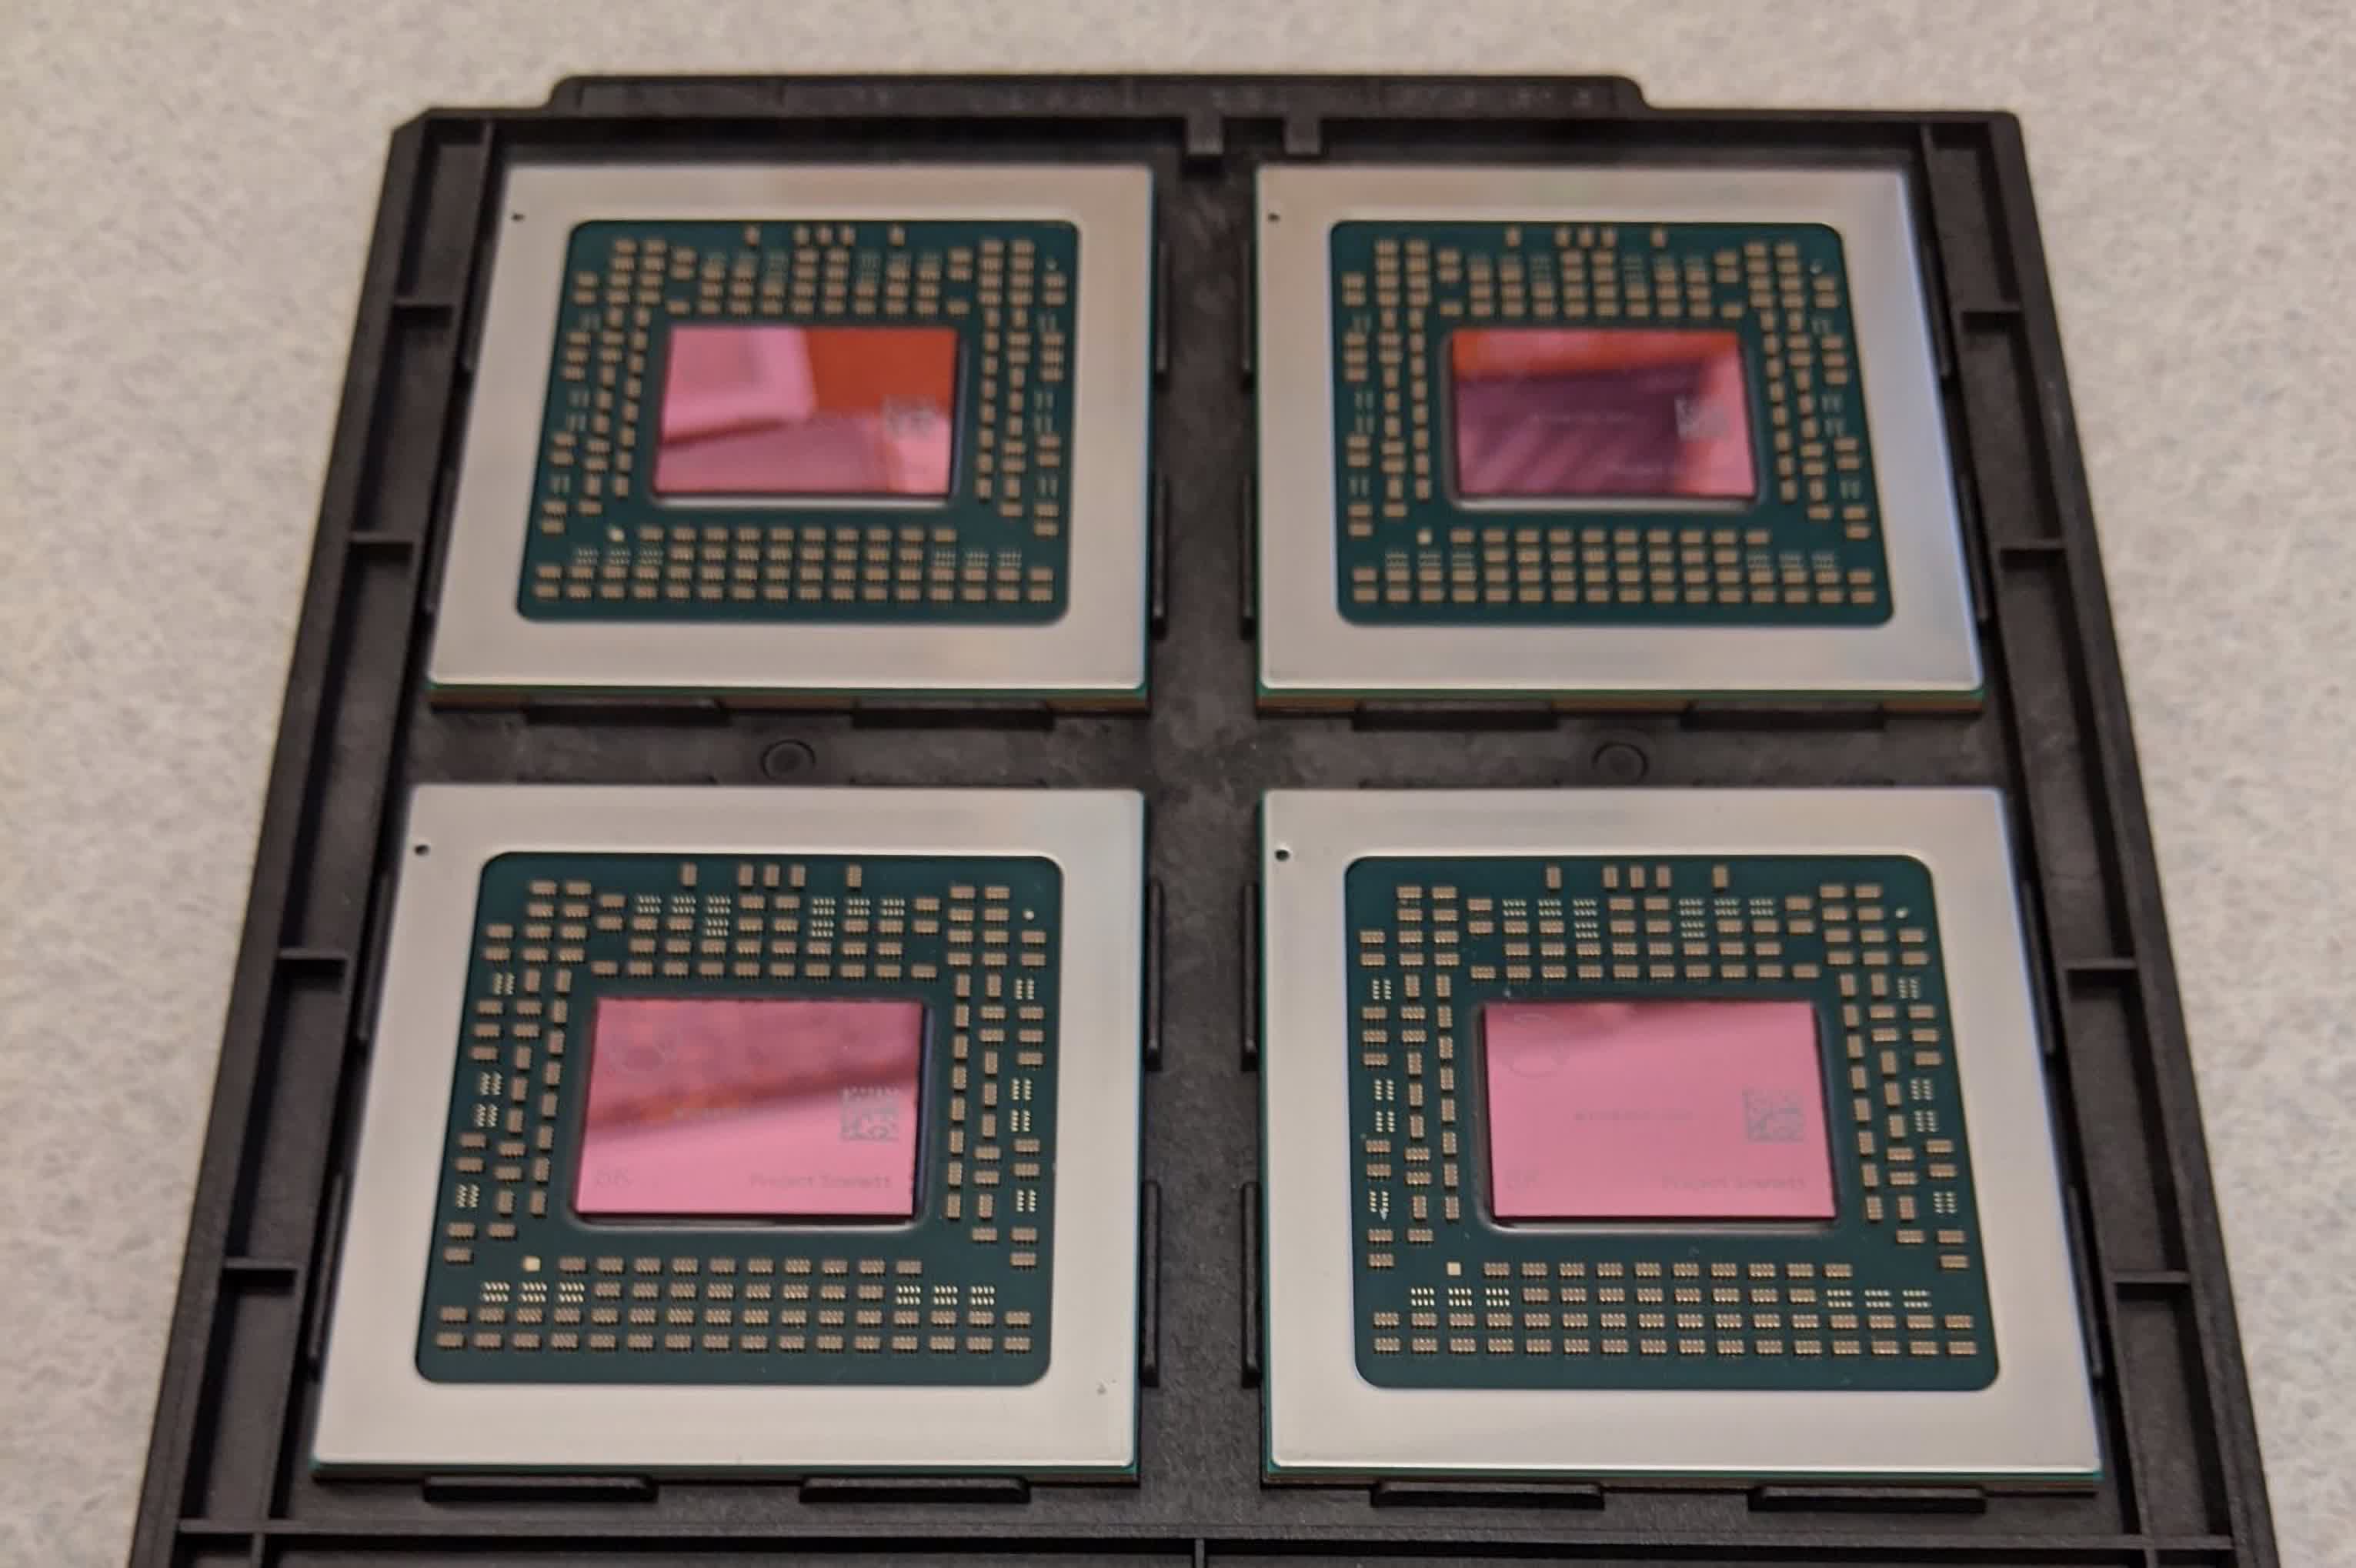 AMD preparing 4800S Desktop Kit based on recycled console APUs